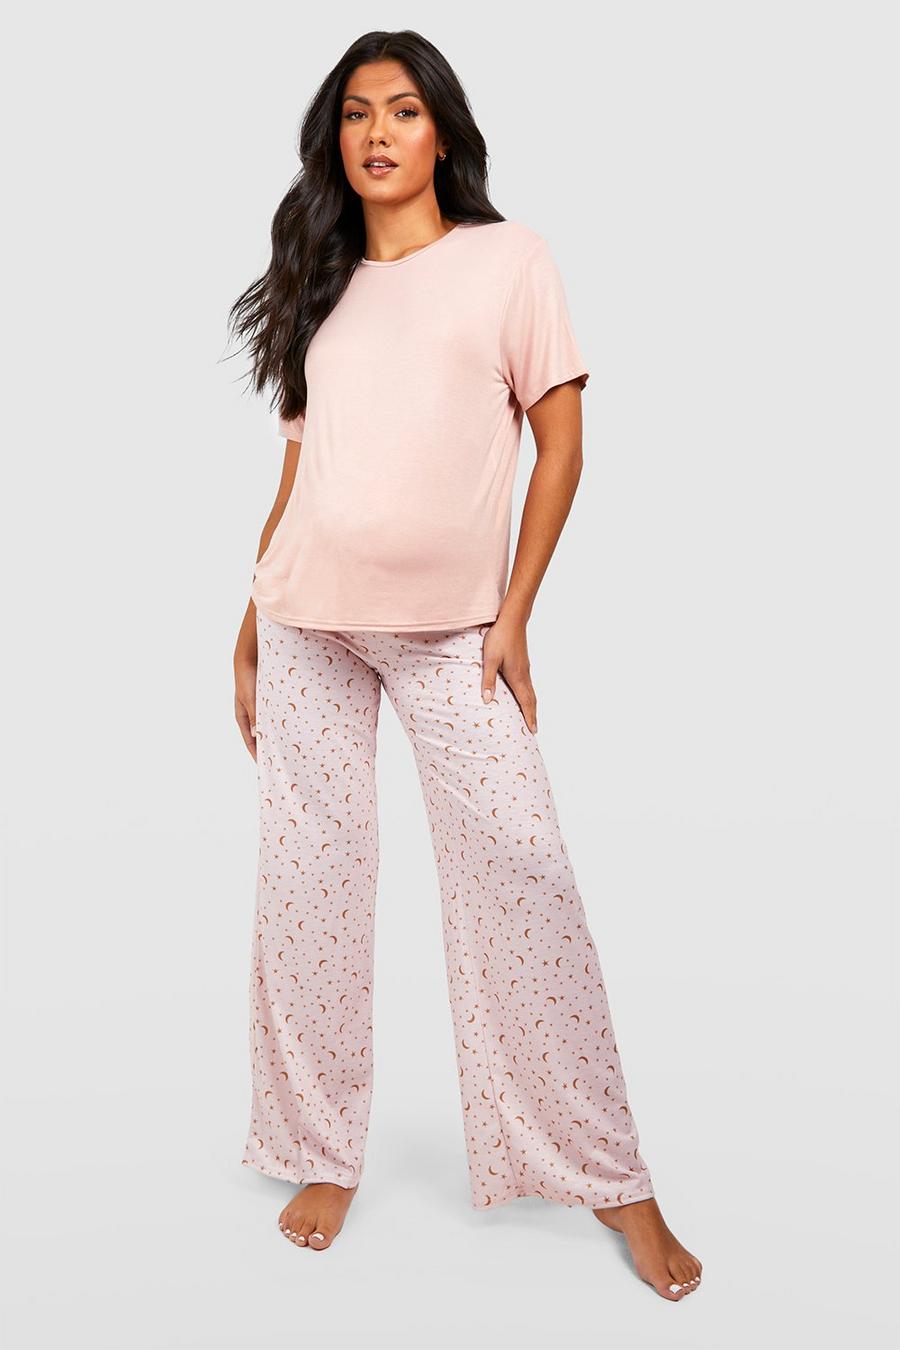 Blush pink Maternity Star Print Pajama Set